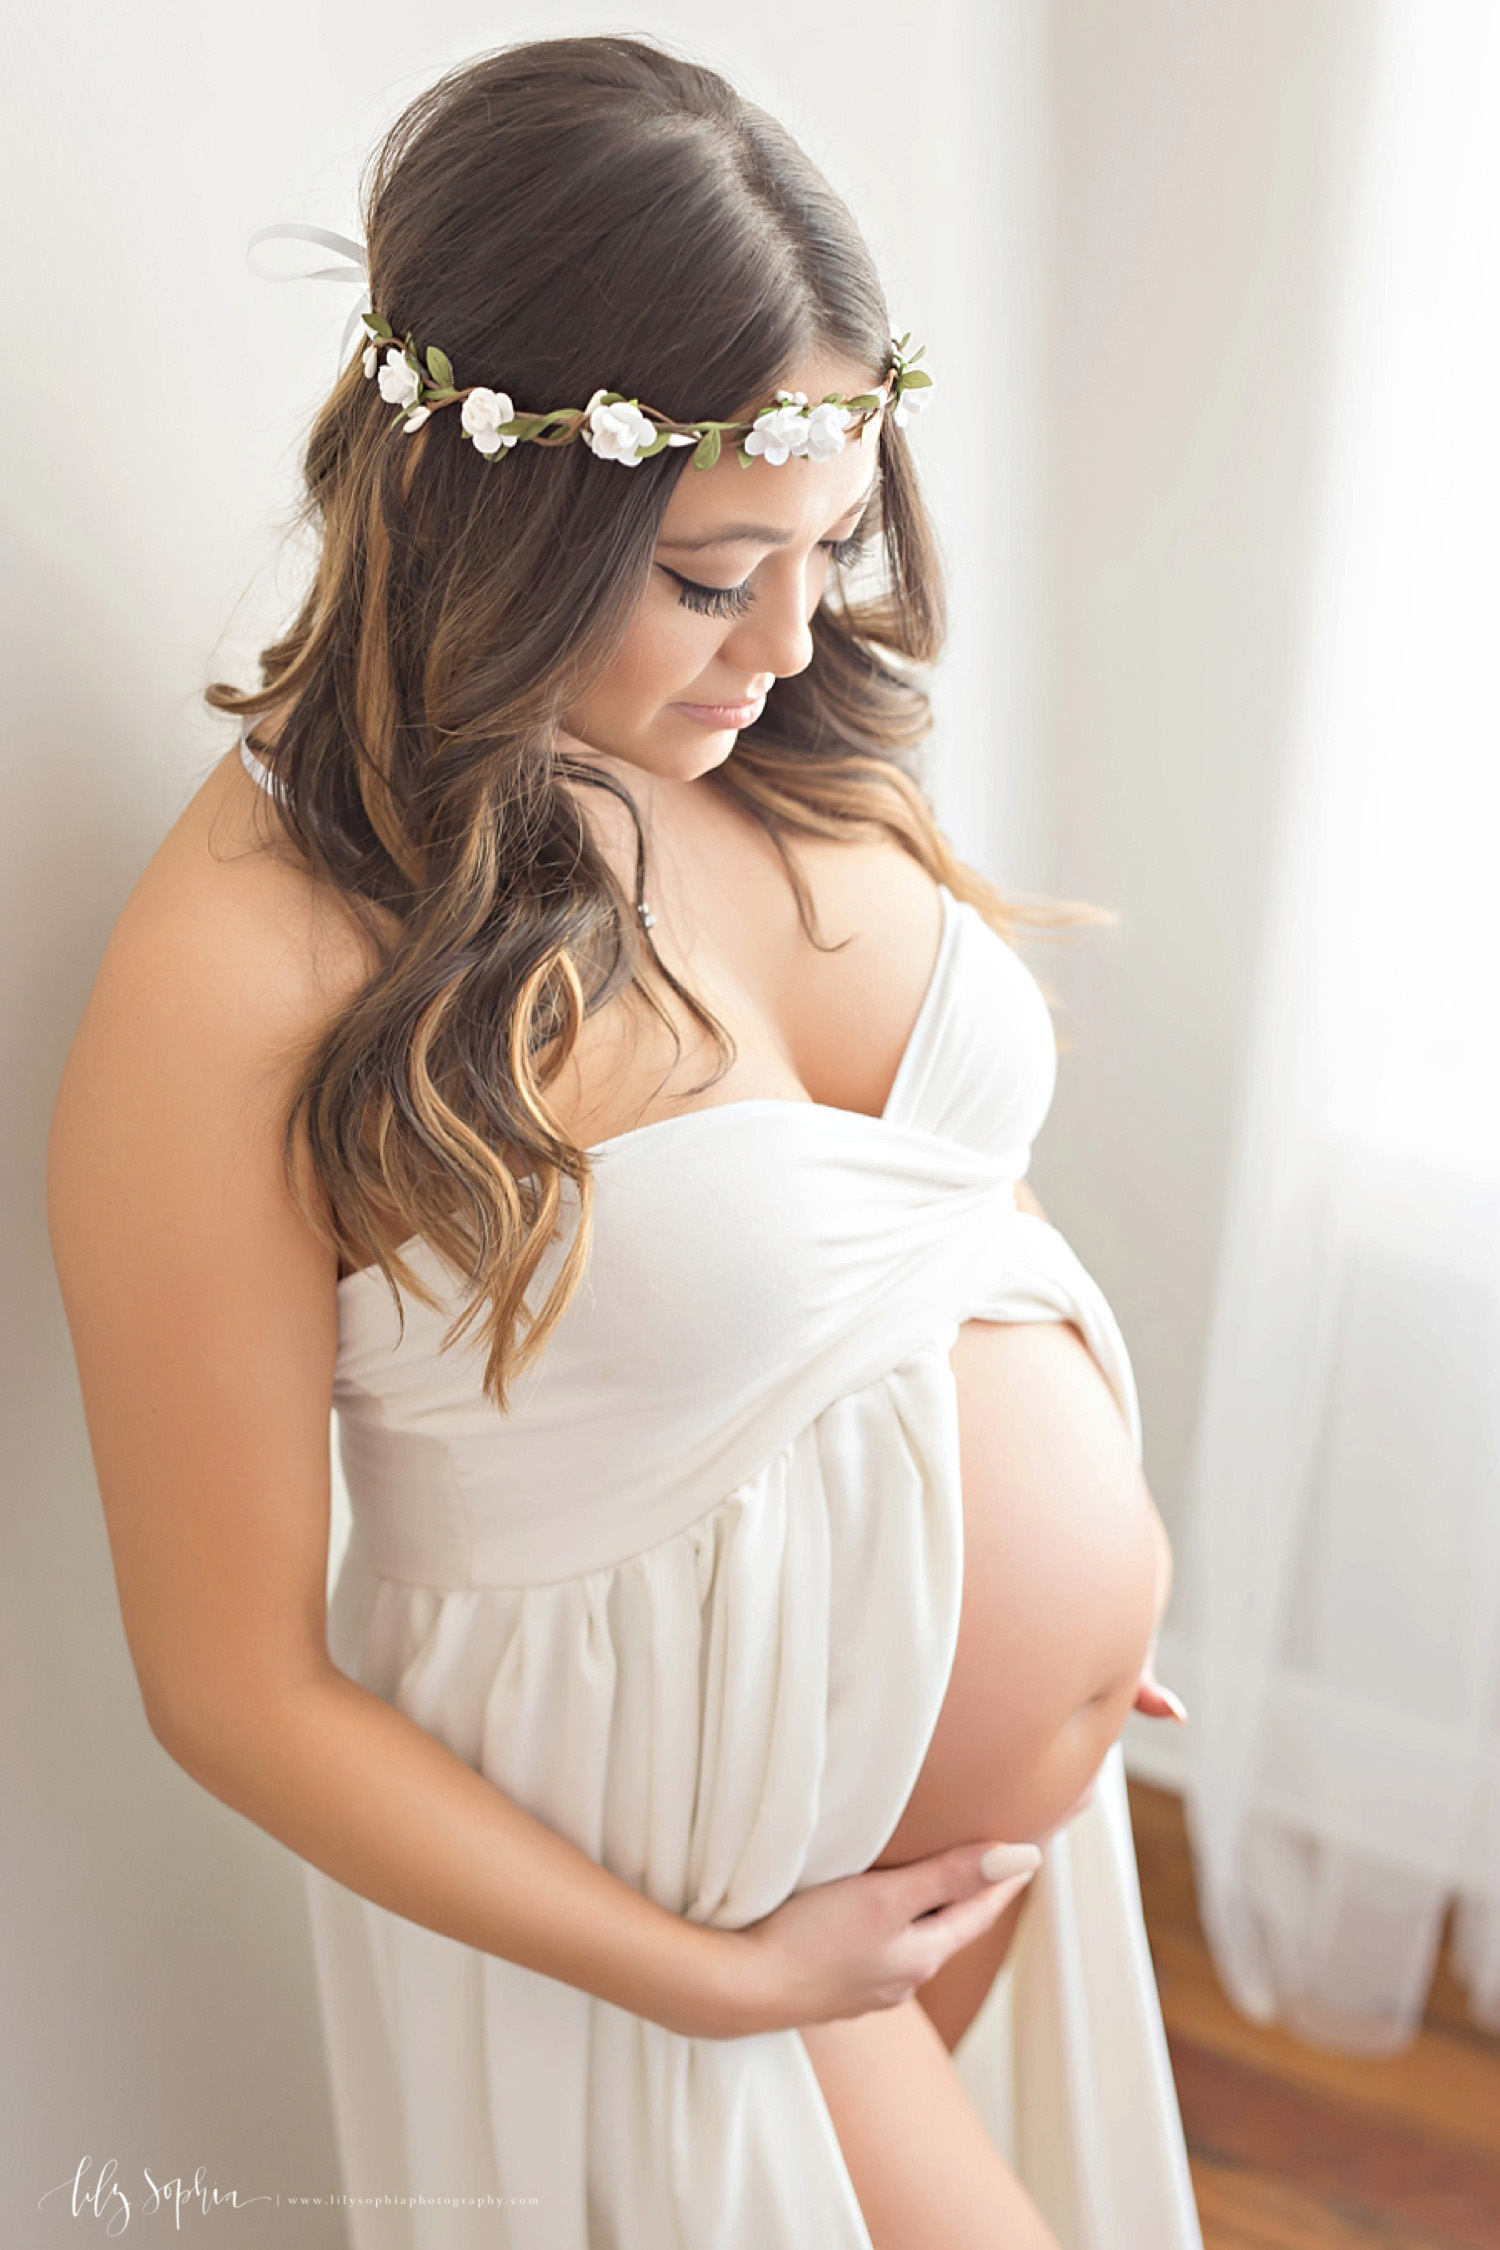 All white maternity photoshoot bodysuit crown